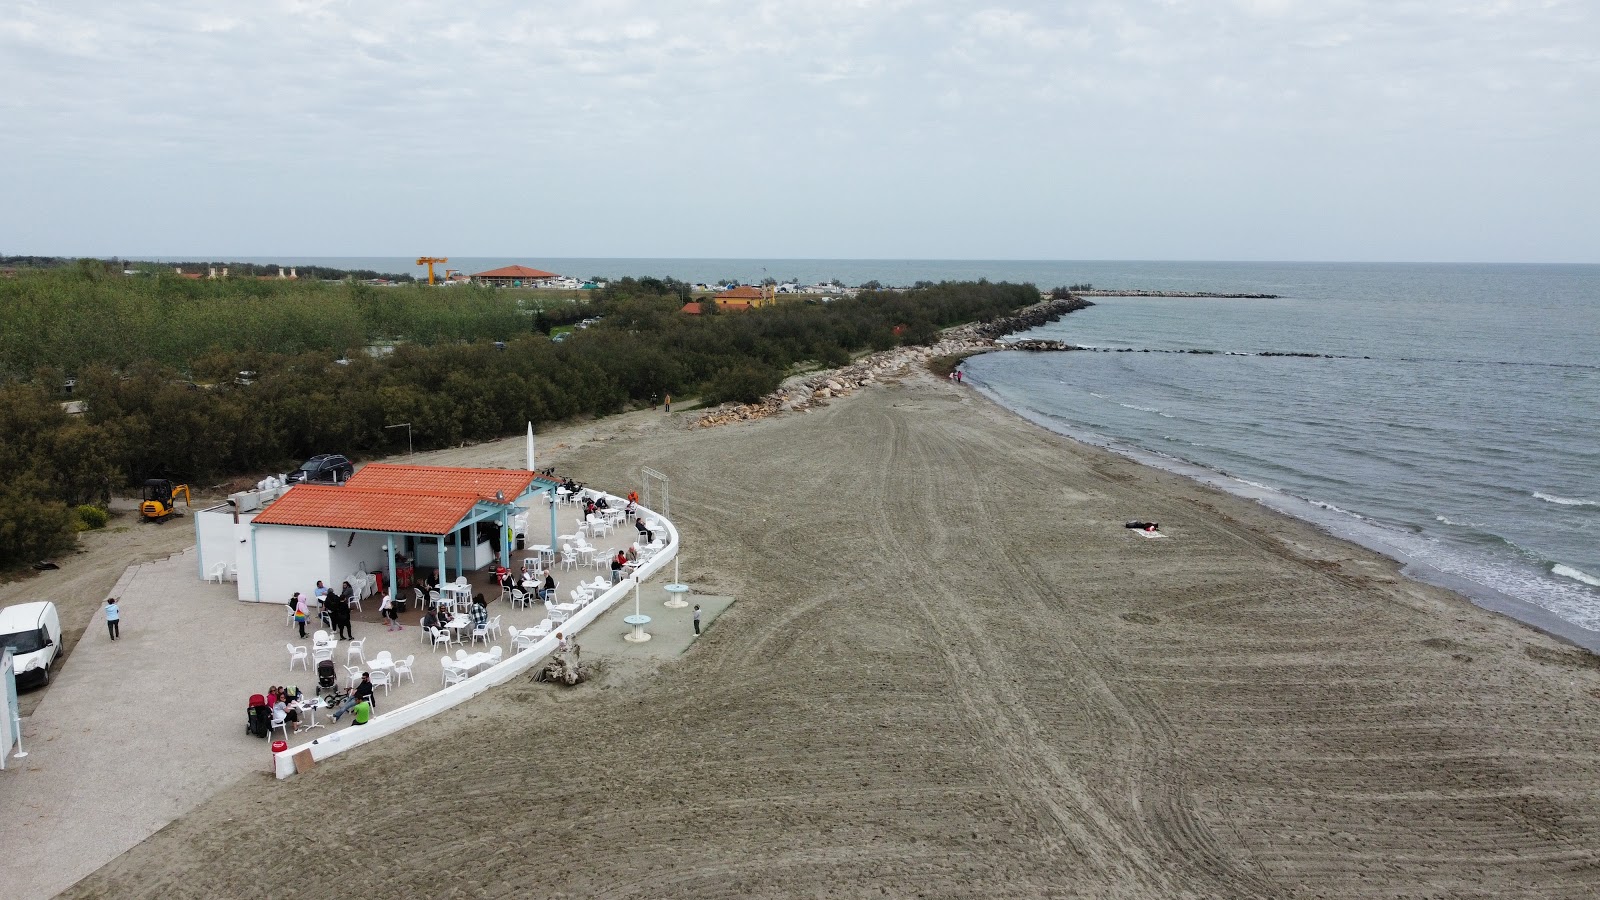 Foto de Spiaggia Delle Conchiglie con muy limpio nivel de limpieza